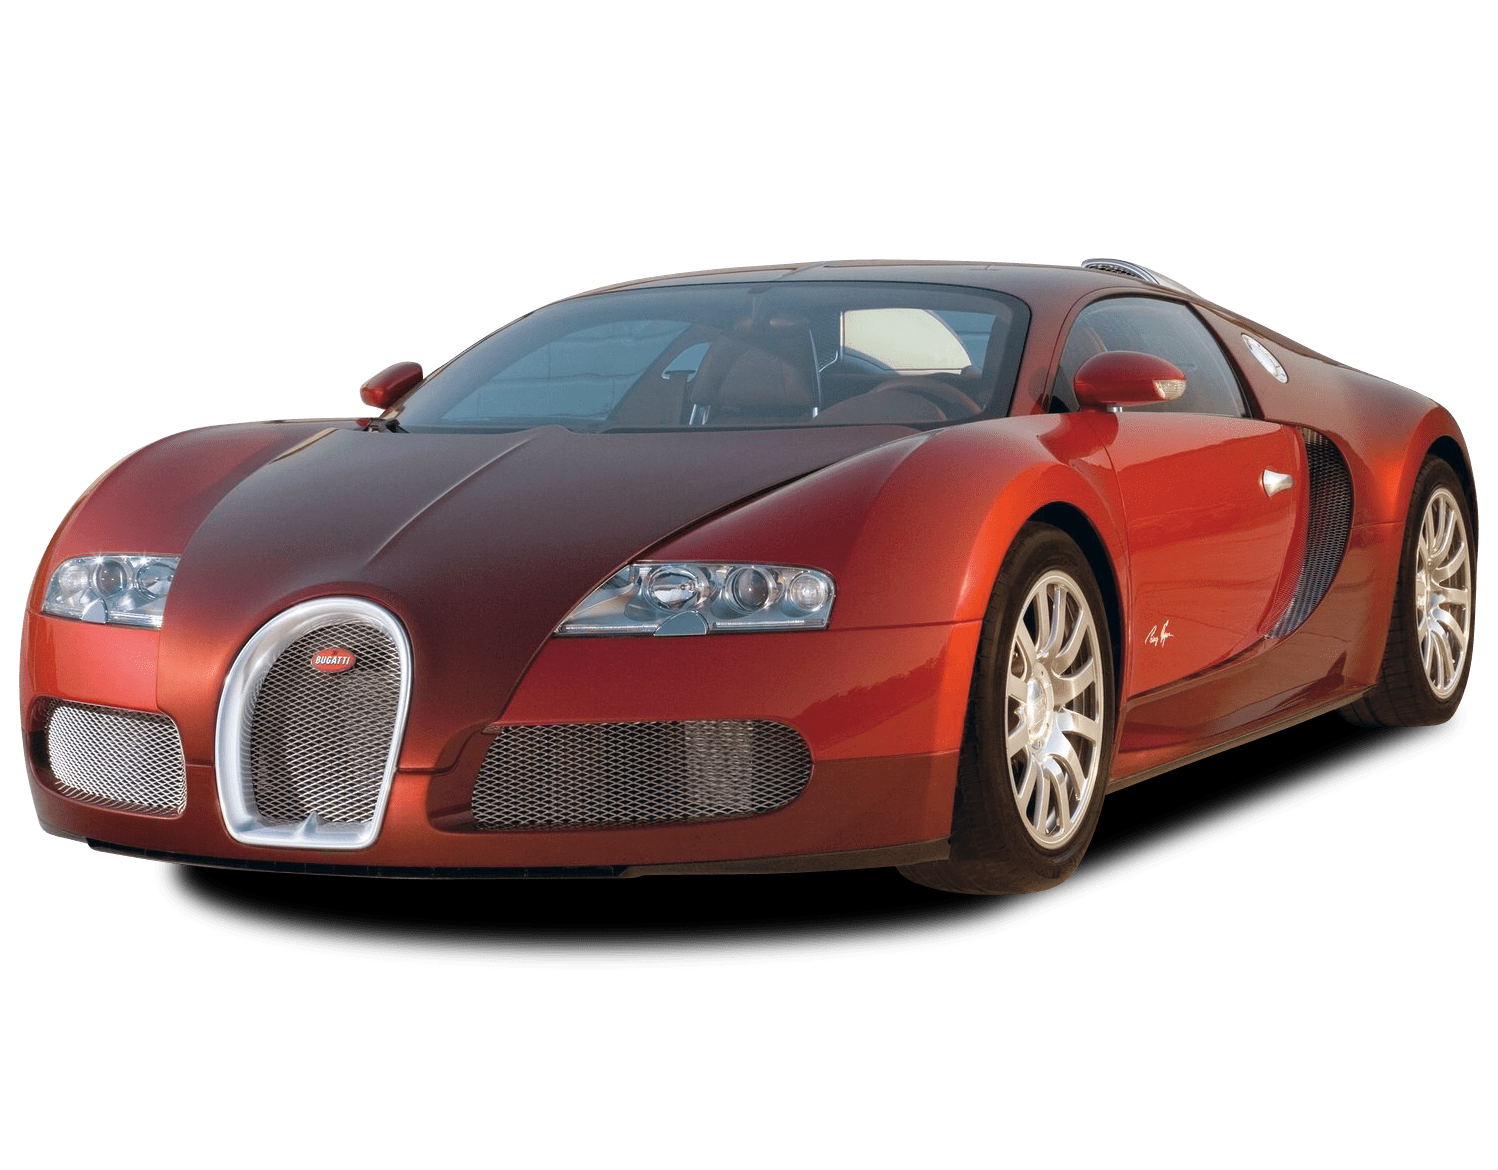 Image Transparente de Bugatti Chiron rouge